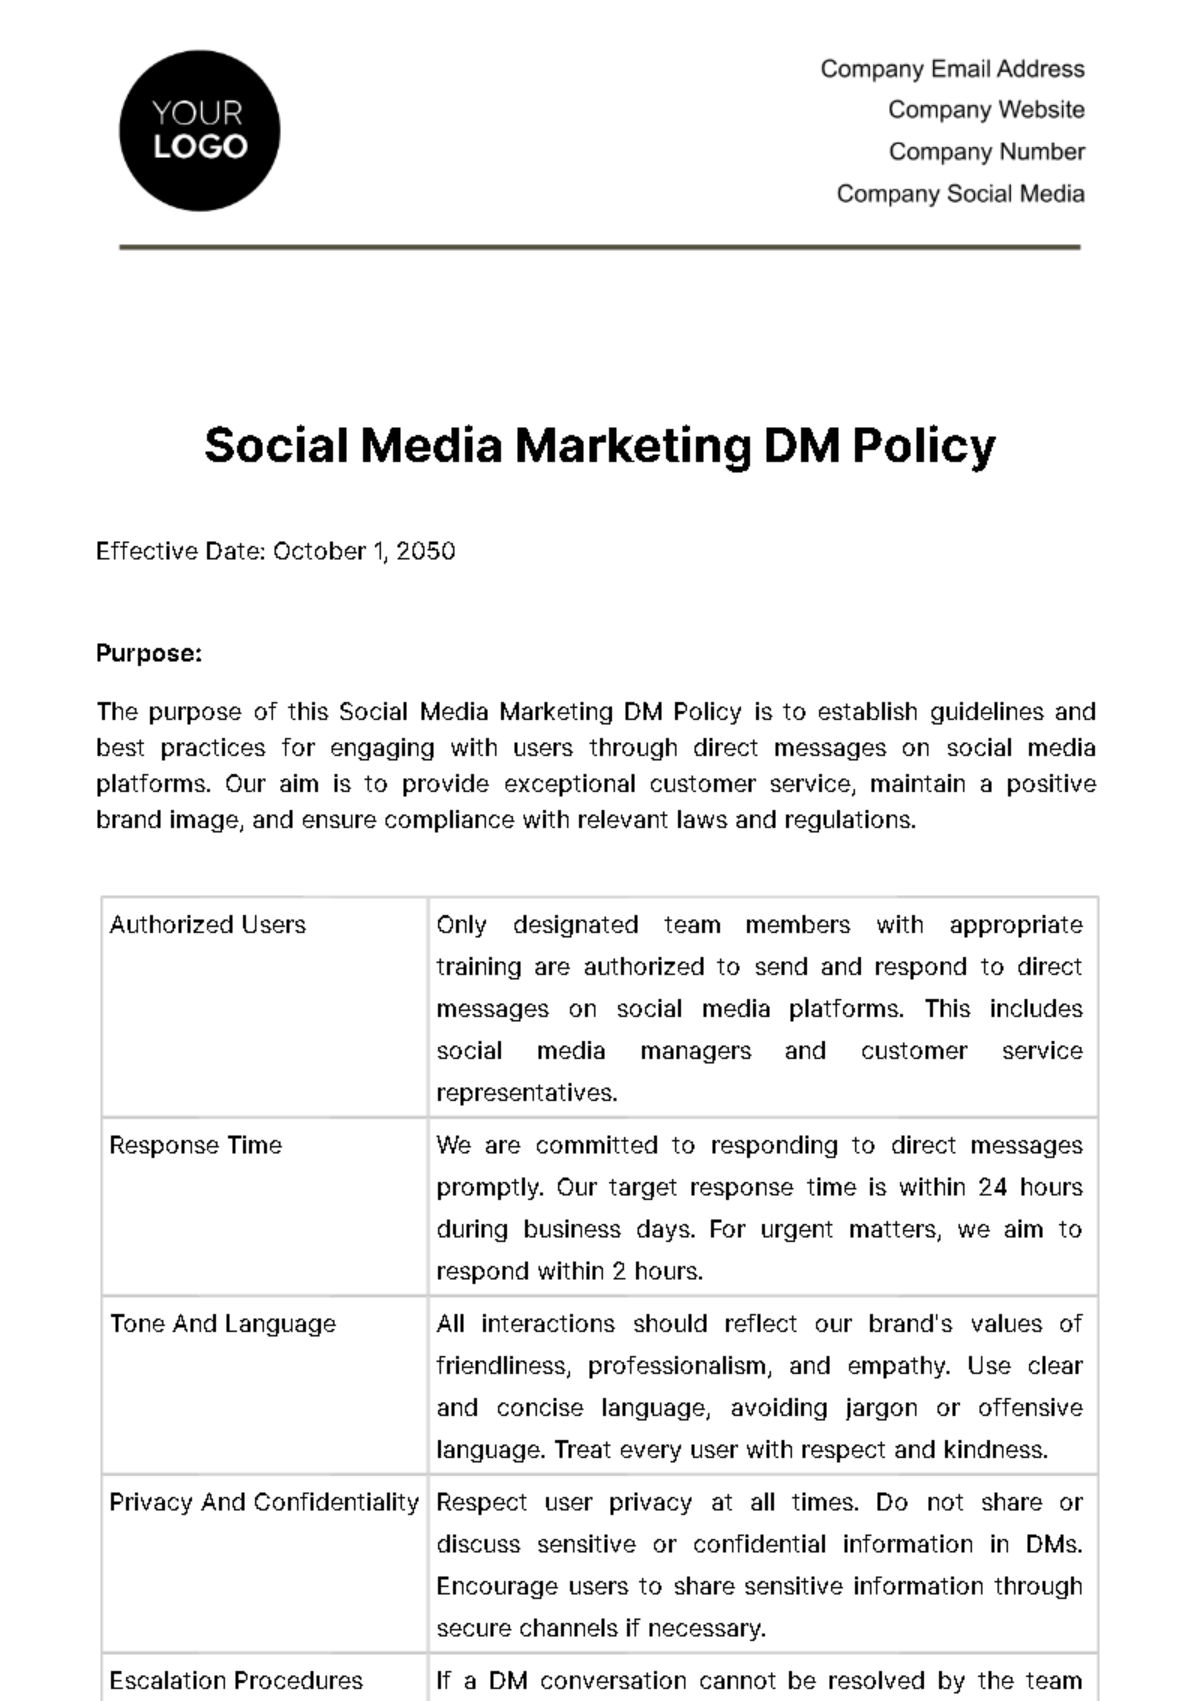 Free Social Media Marketing DM Policy Template